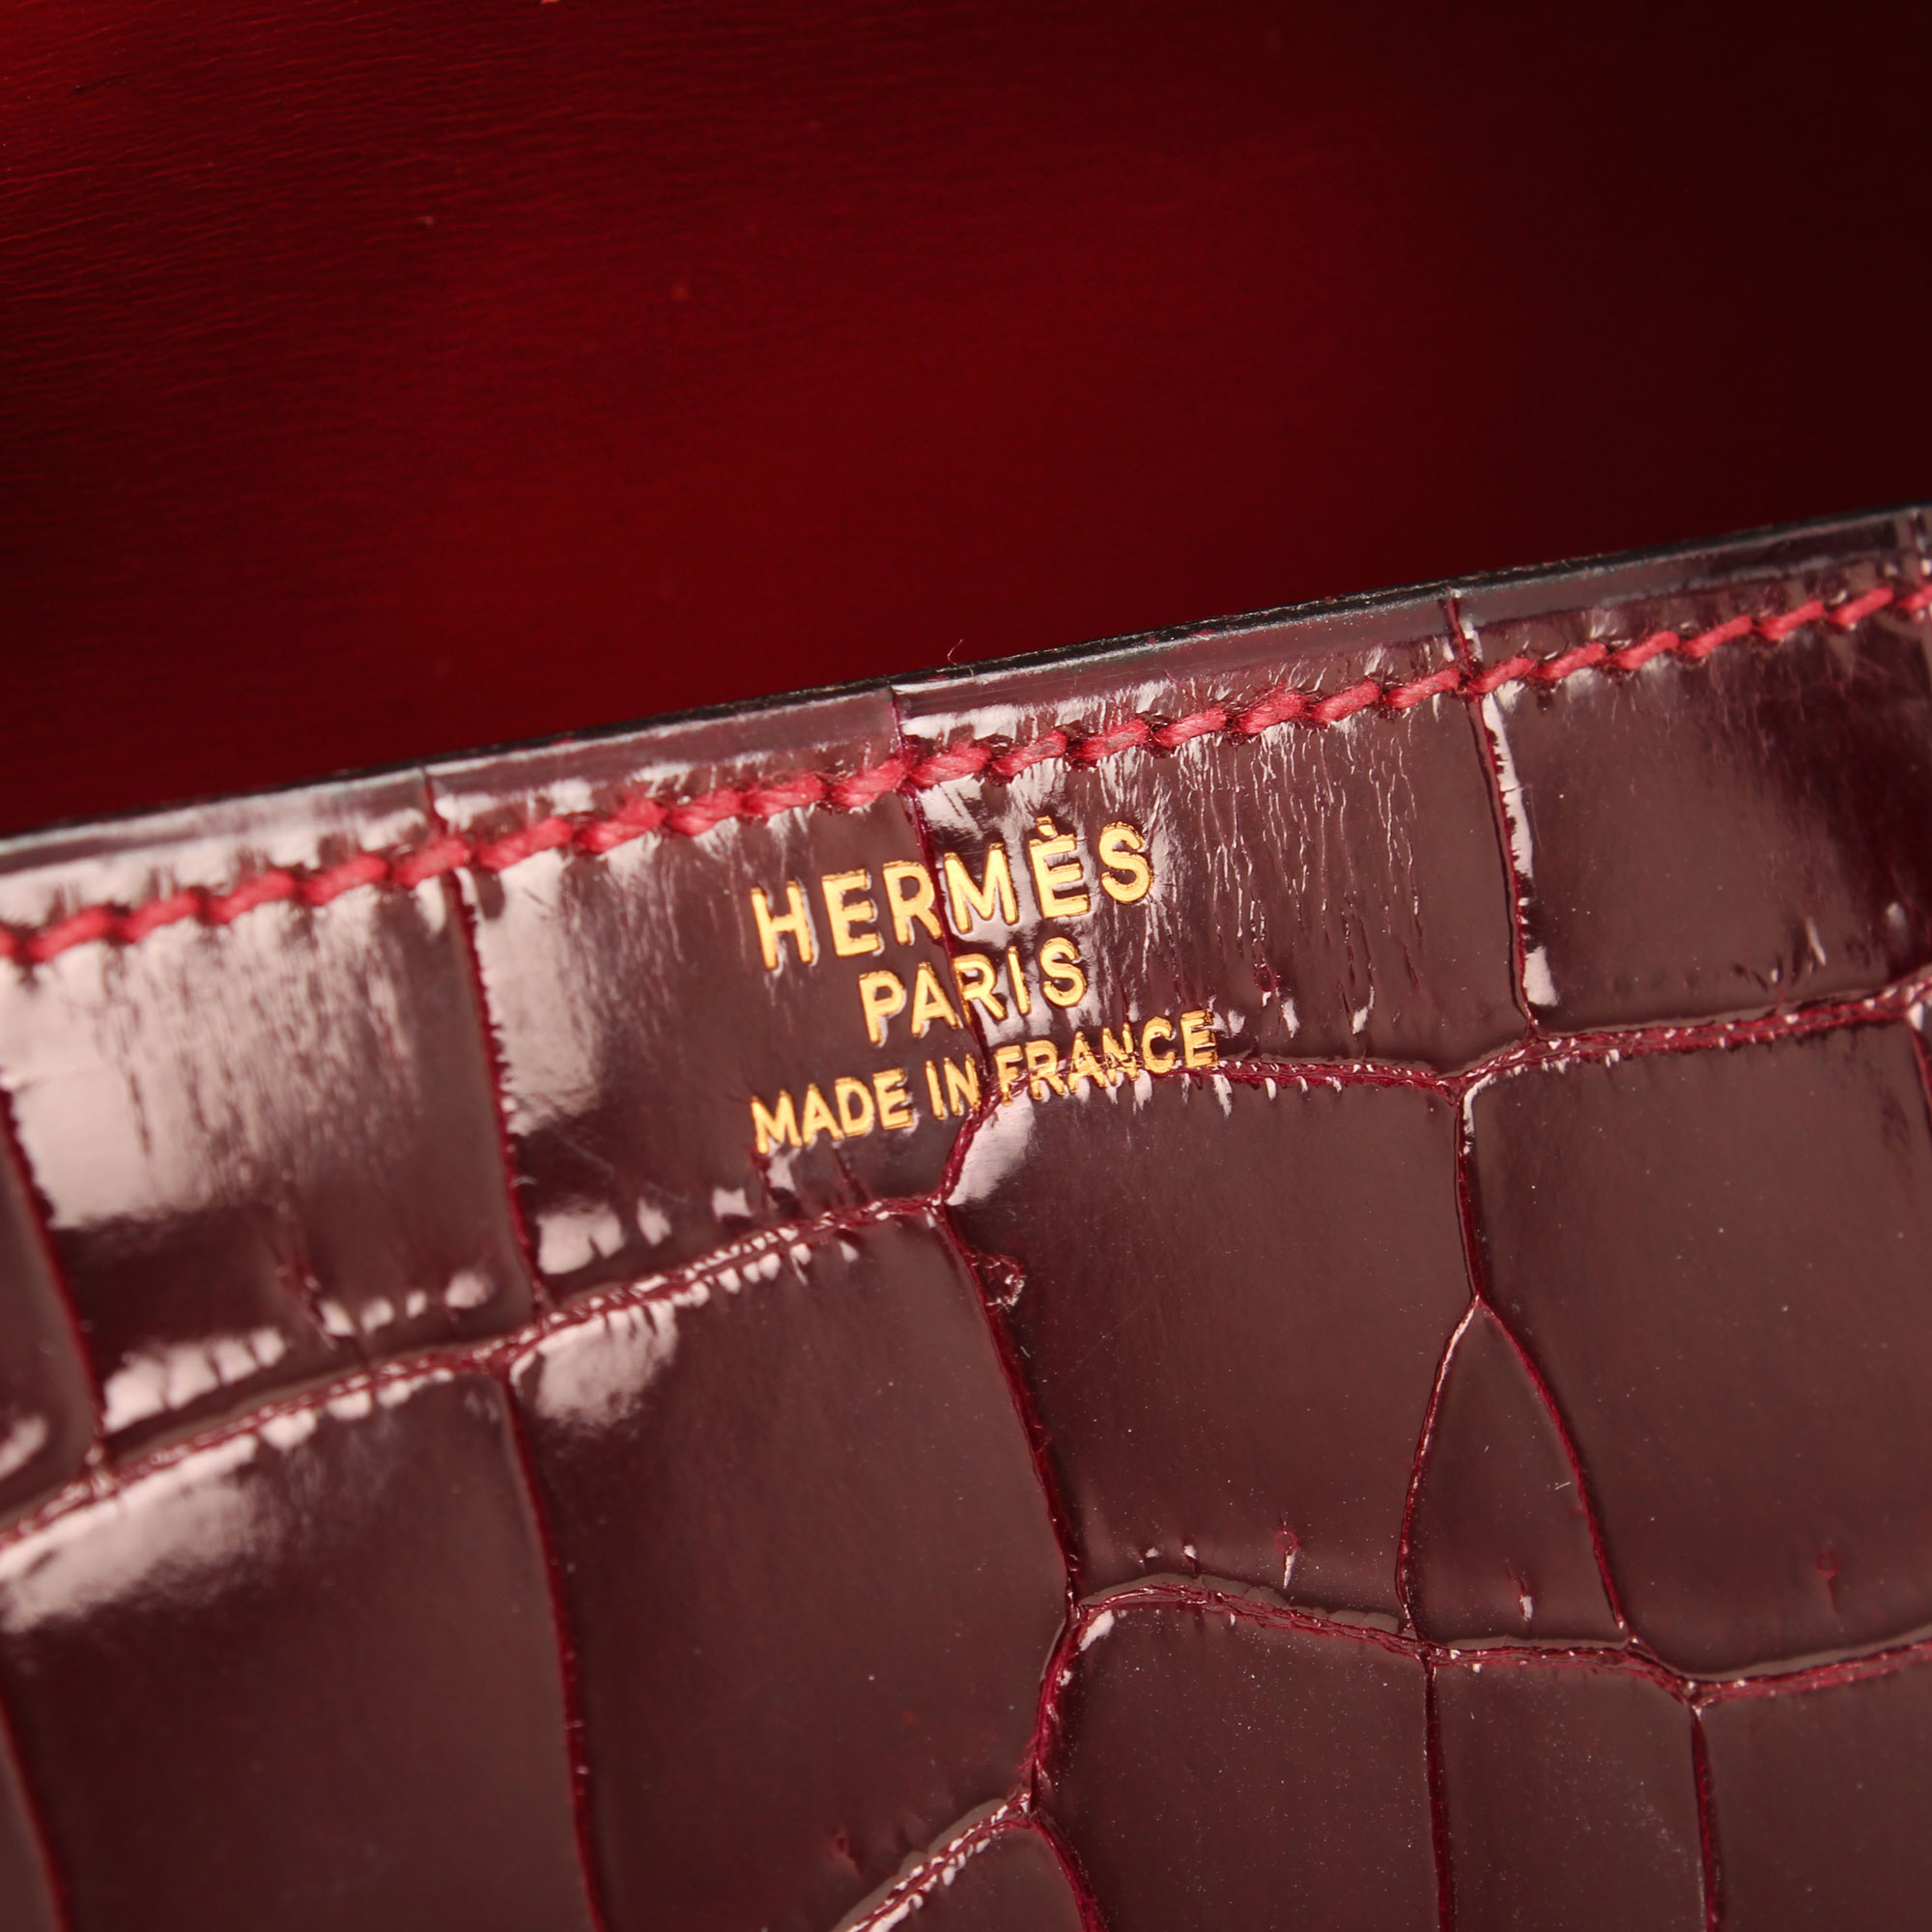 Imagen del a firma del bolso hermes drag vintage cocodrilo poroso color frambuesa